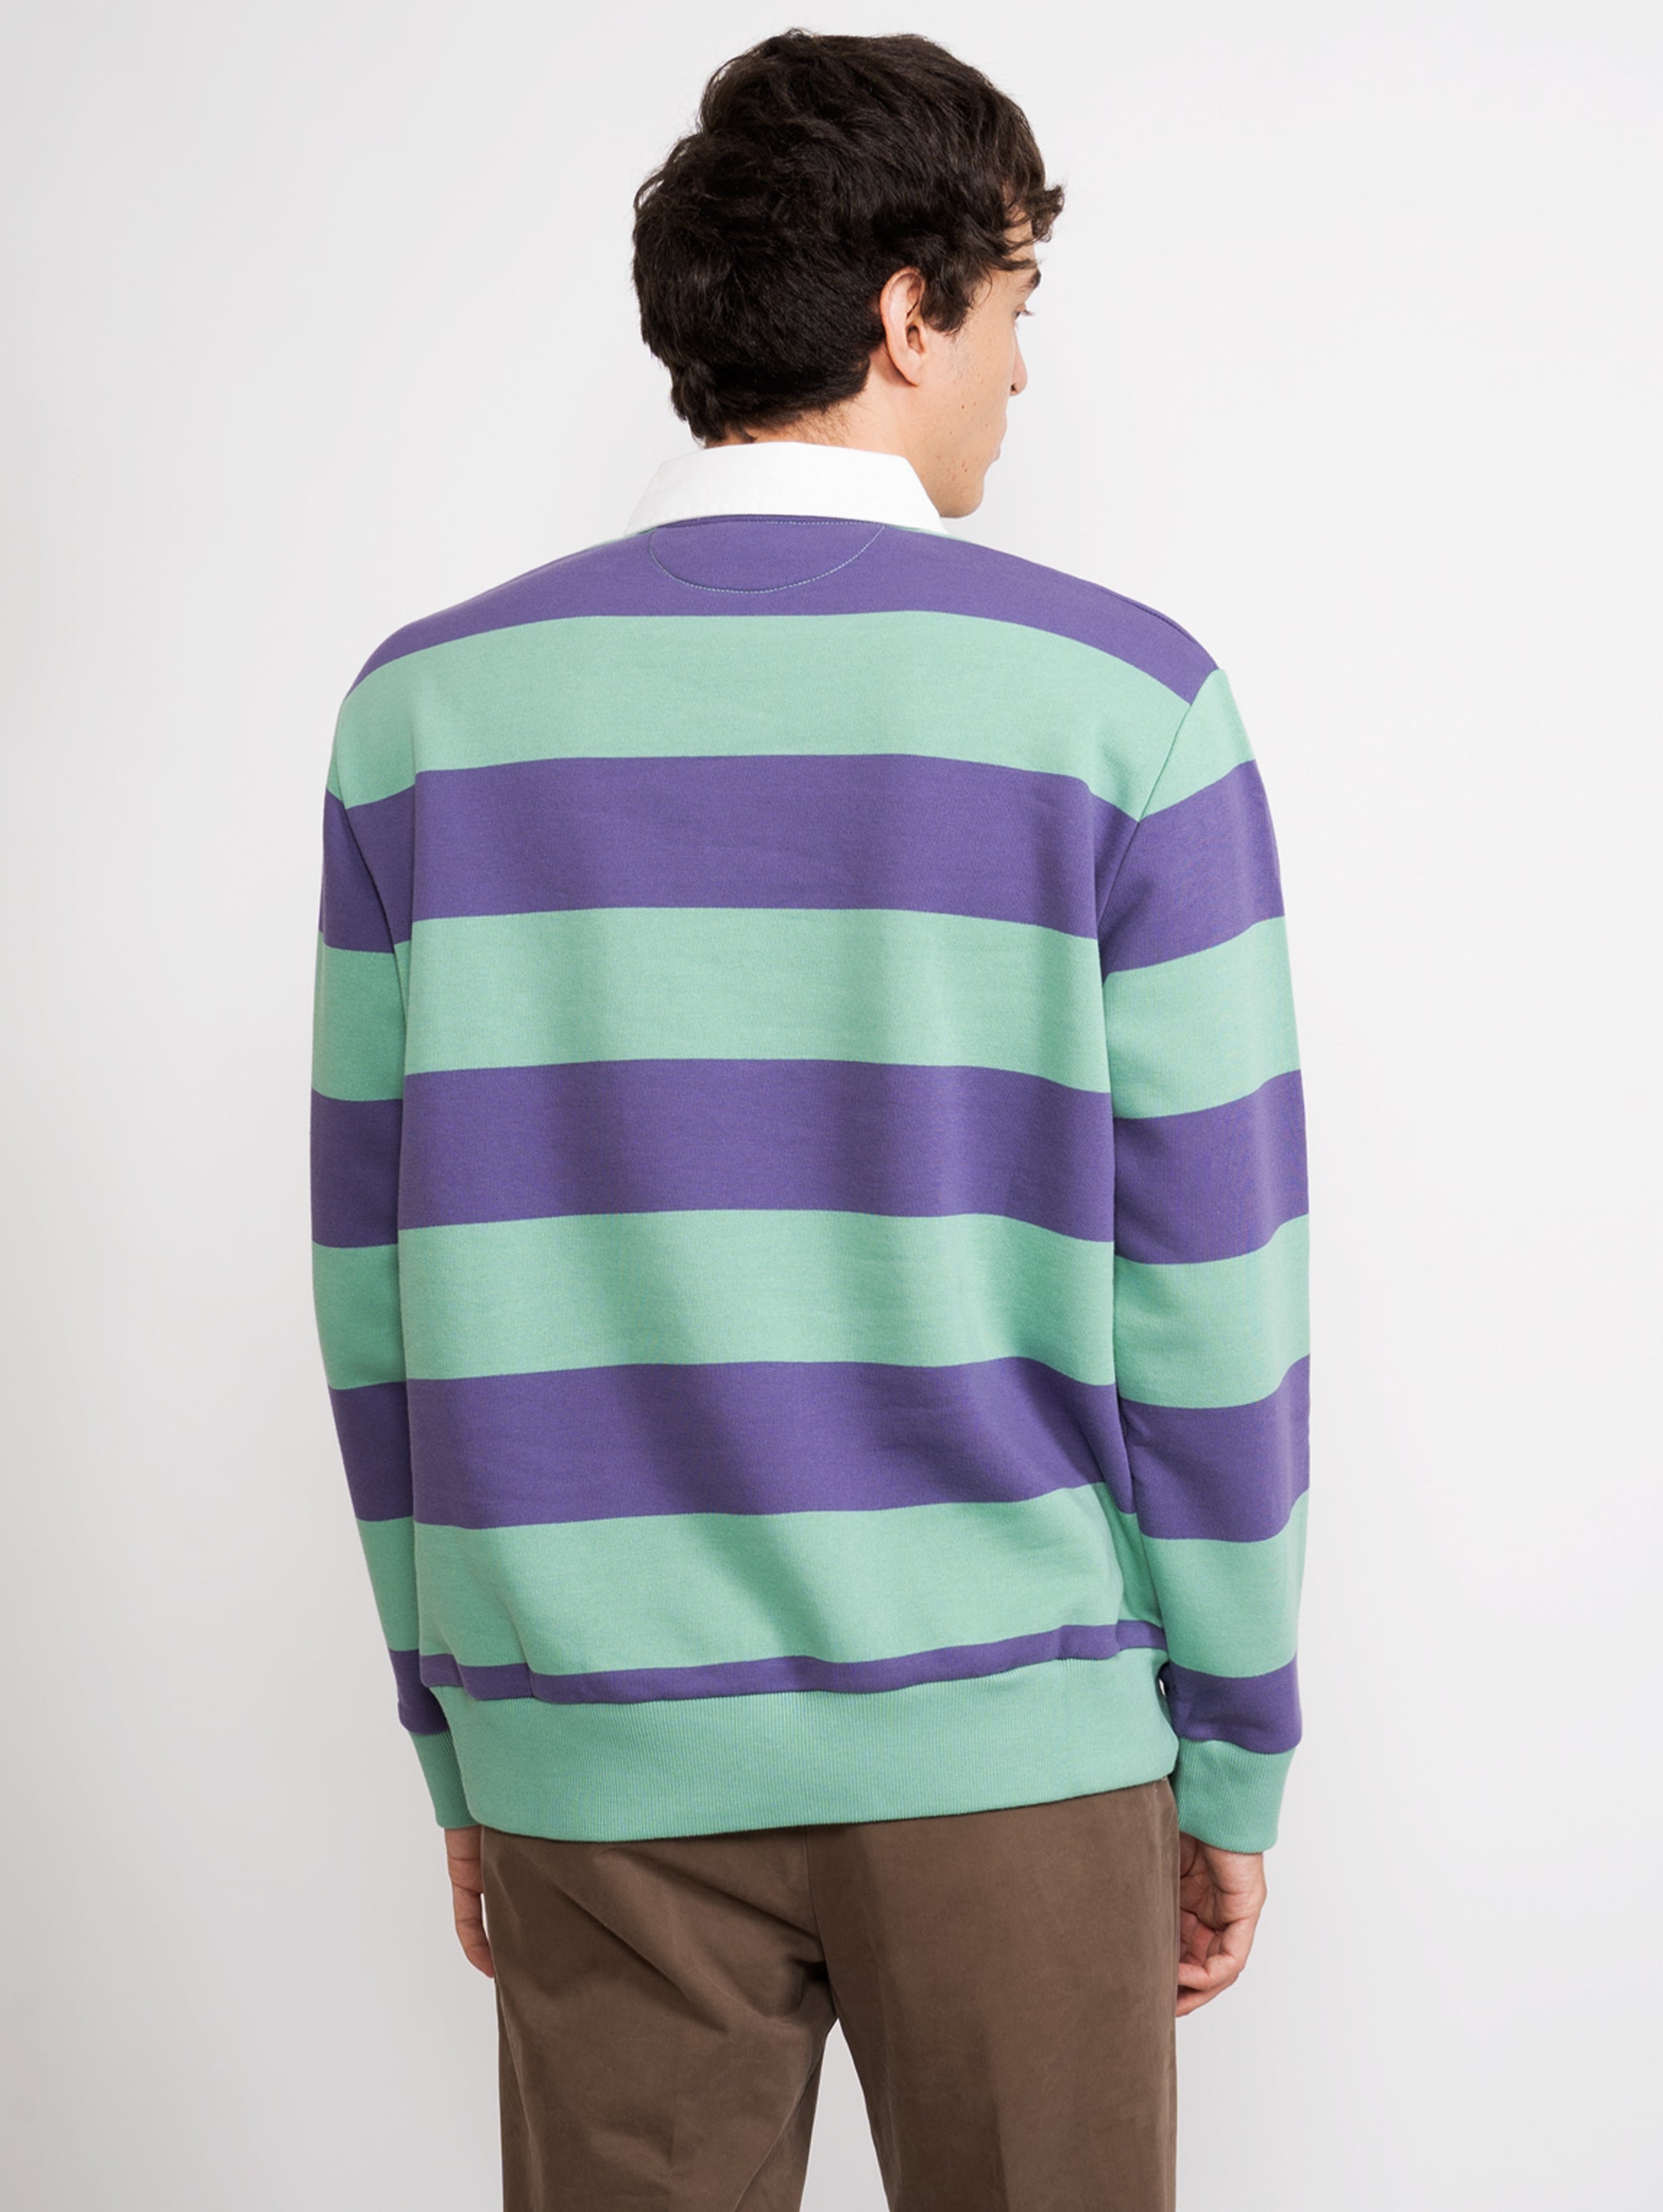 Green / Purple Striped Rugby Style Sweatshirt